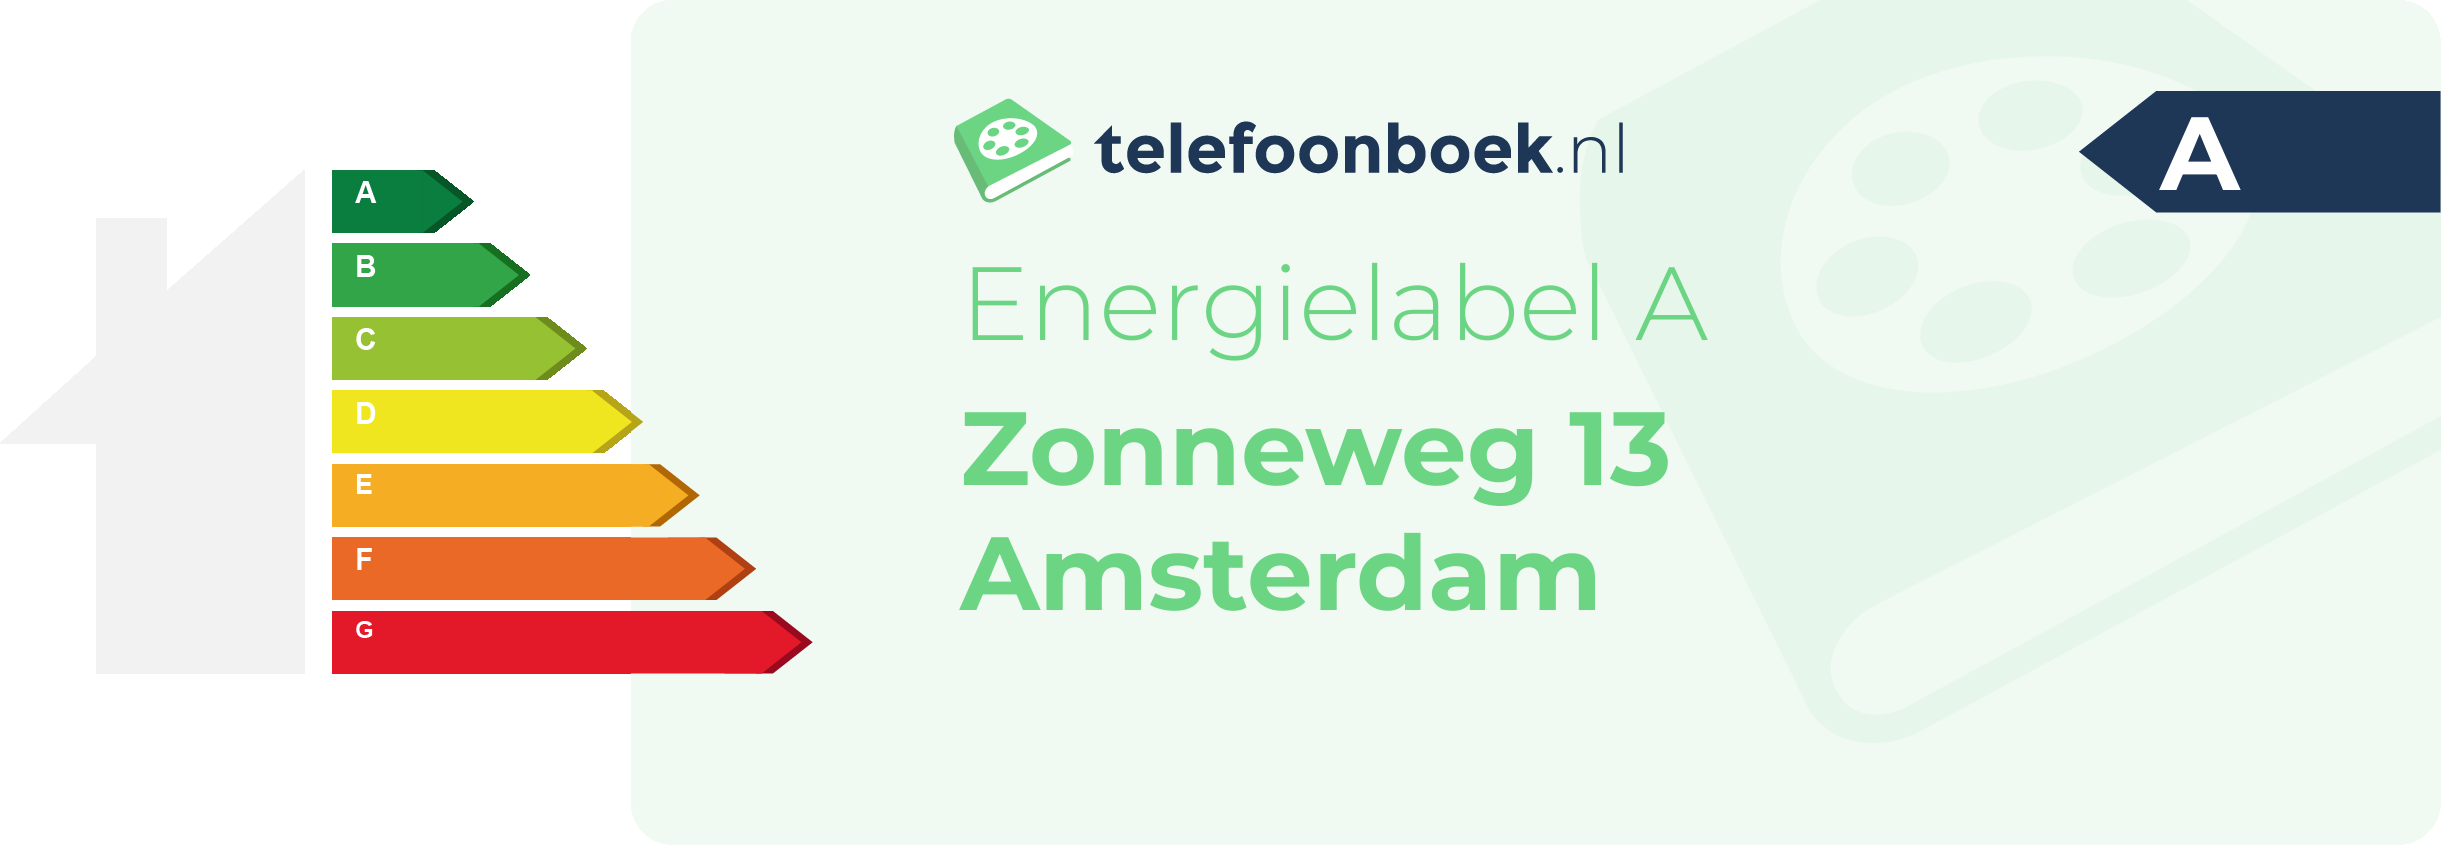 Energielabel Zonneweg 13 Amsterdam